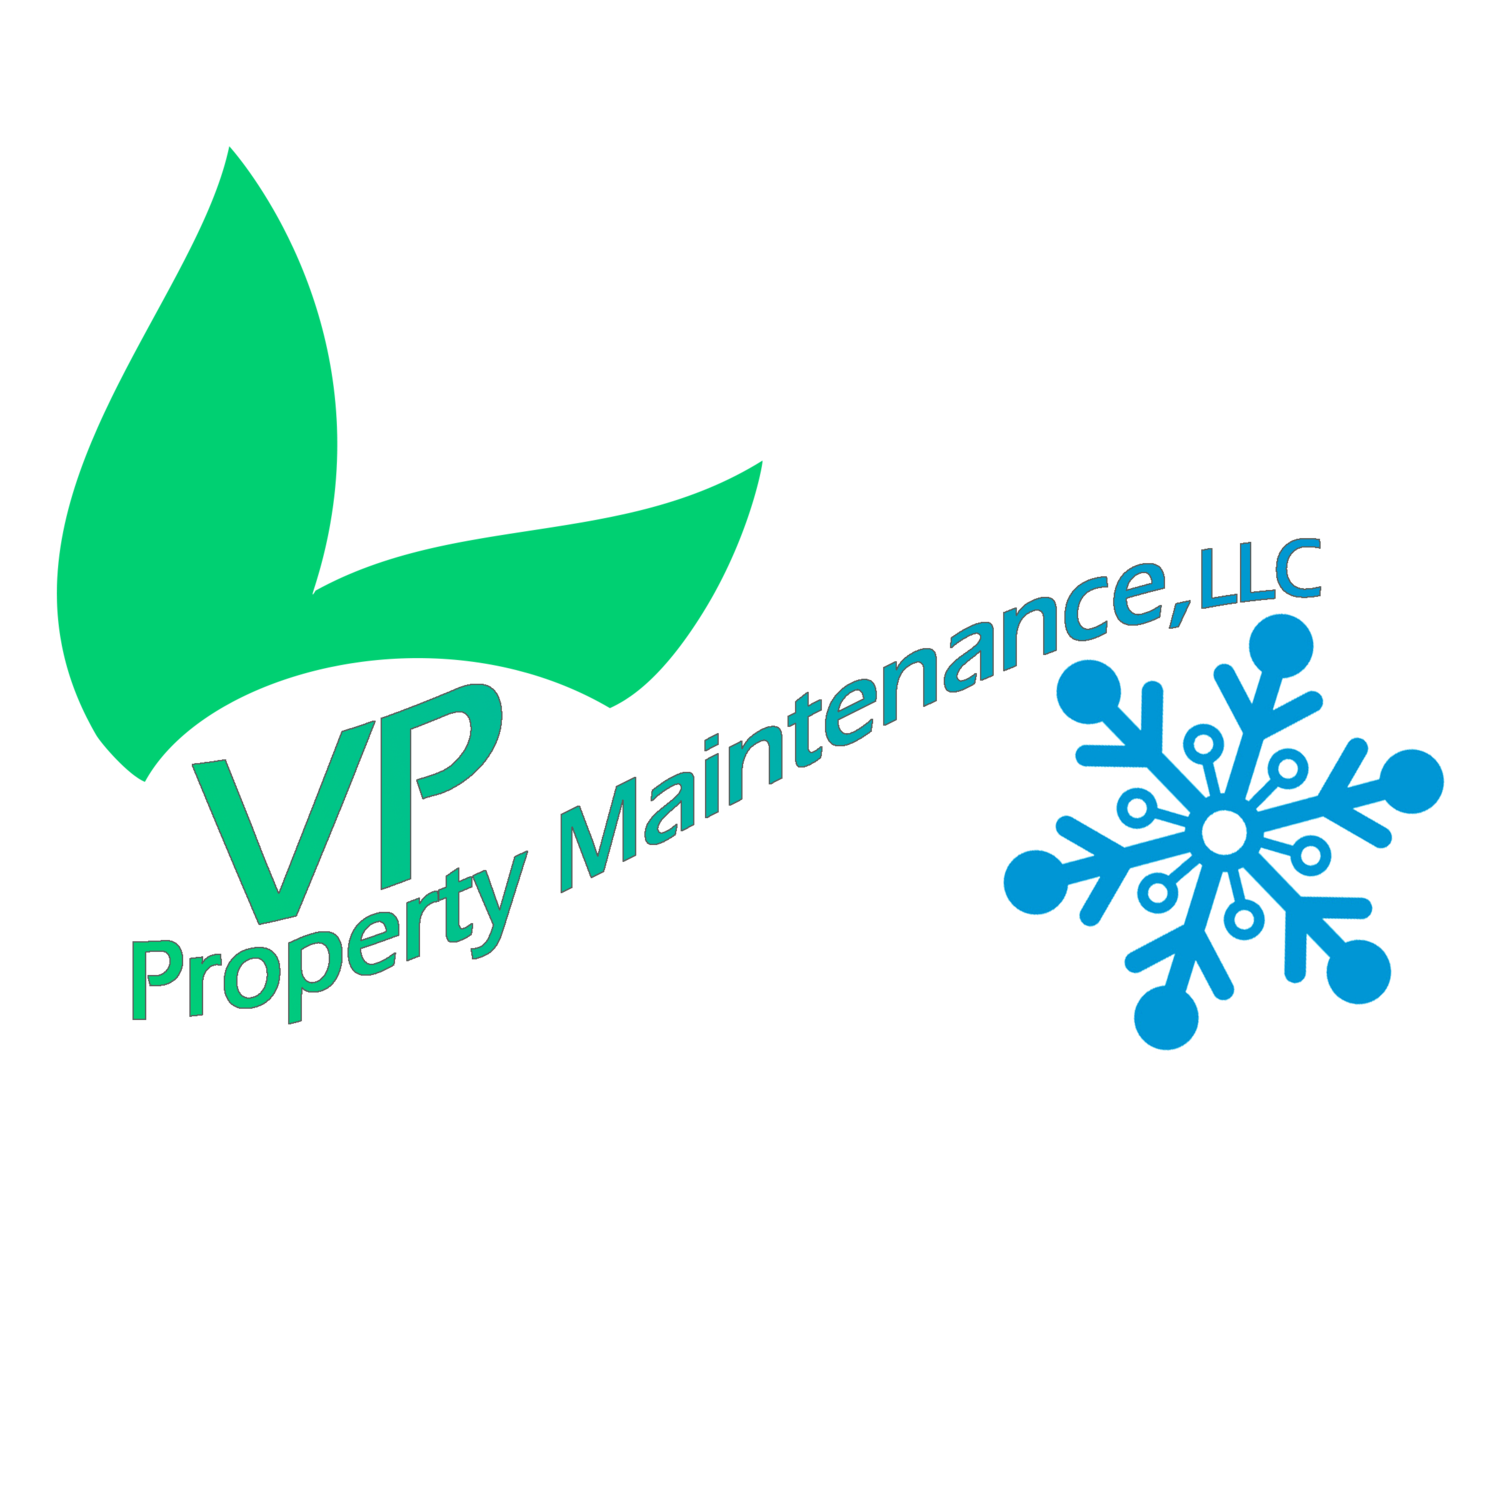 VP Property Maintenance LLC